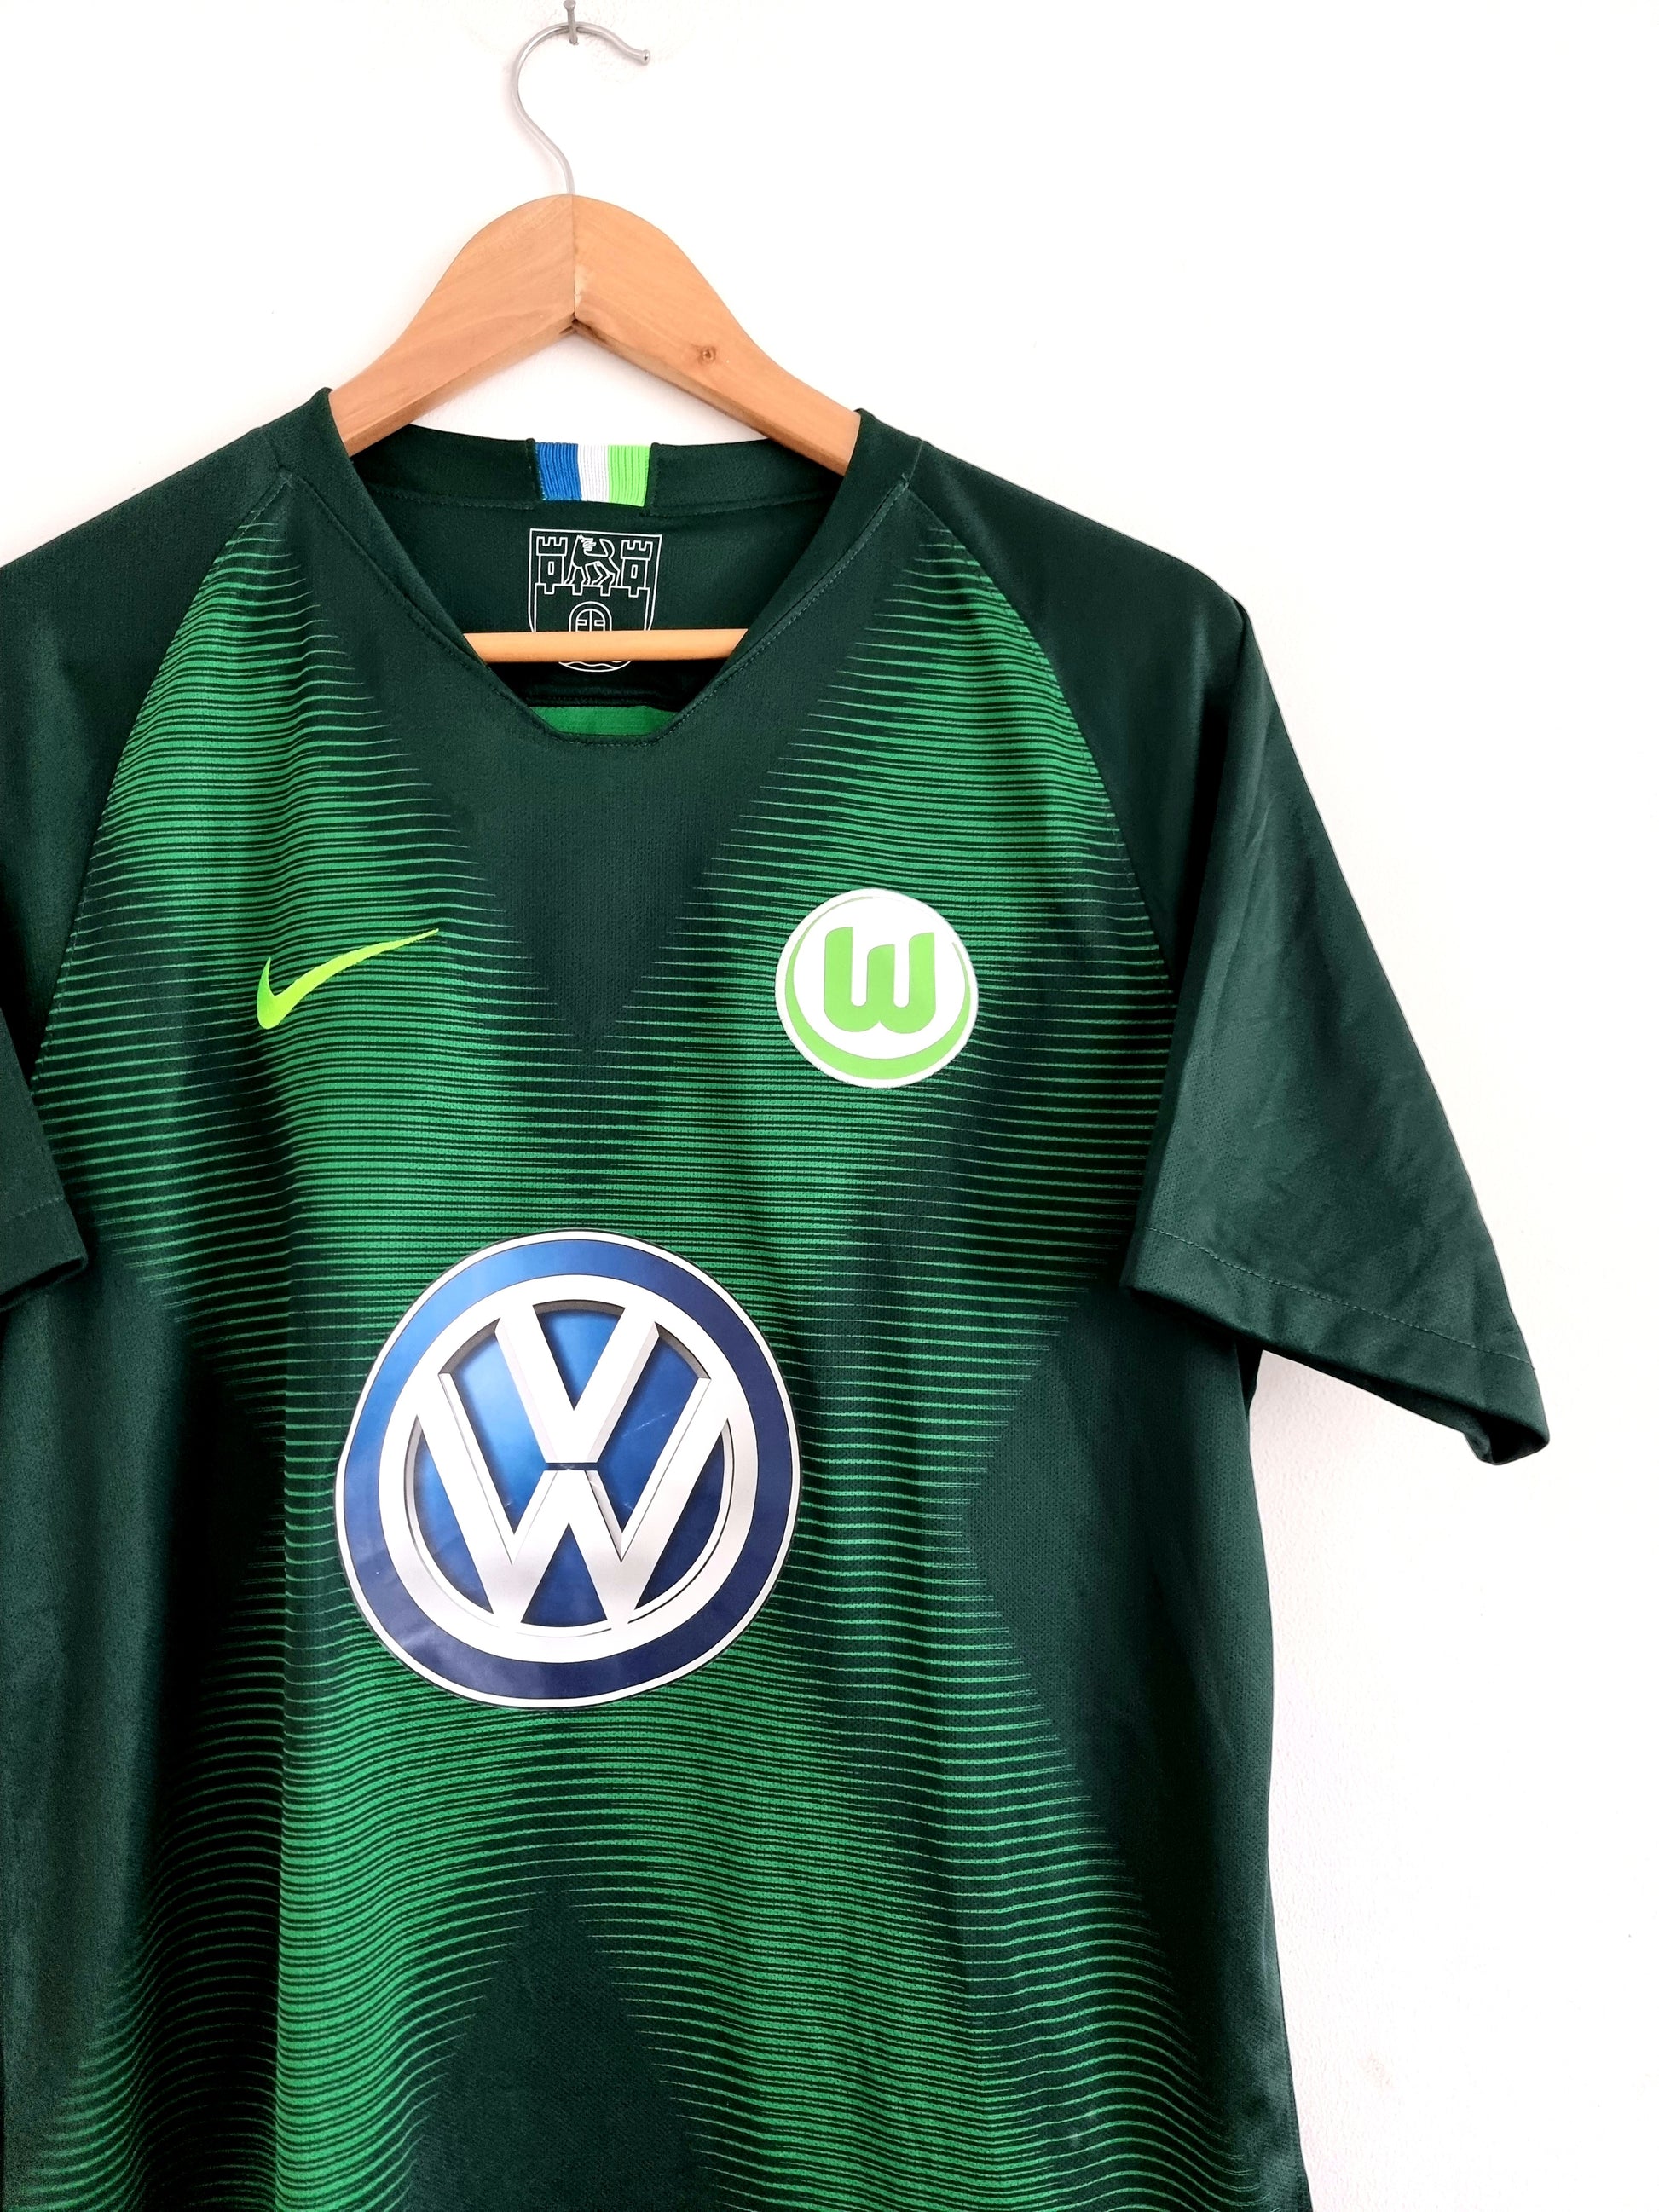 Nike Wolfsburg 18/19 'Moker 26' Signed Shirt Medium – Granny's Football